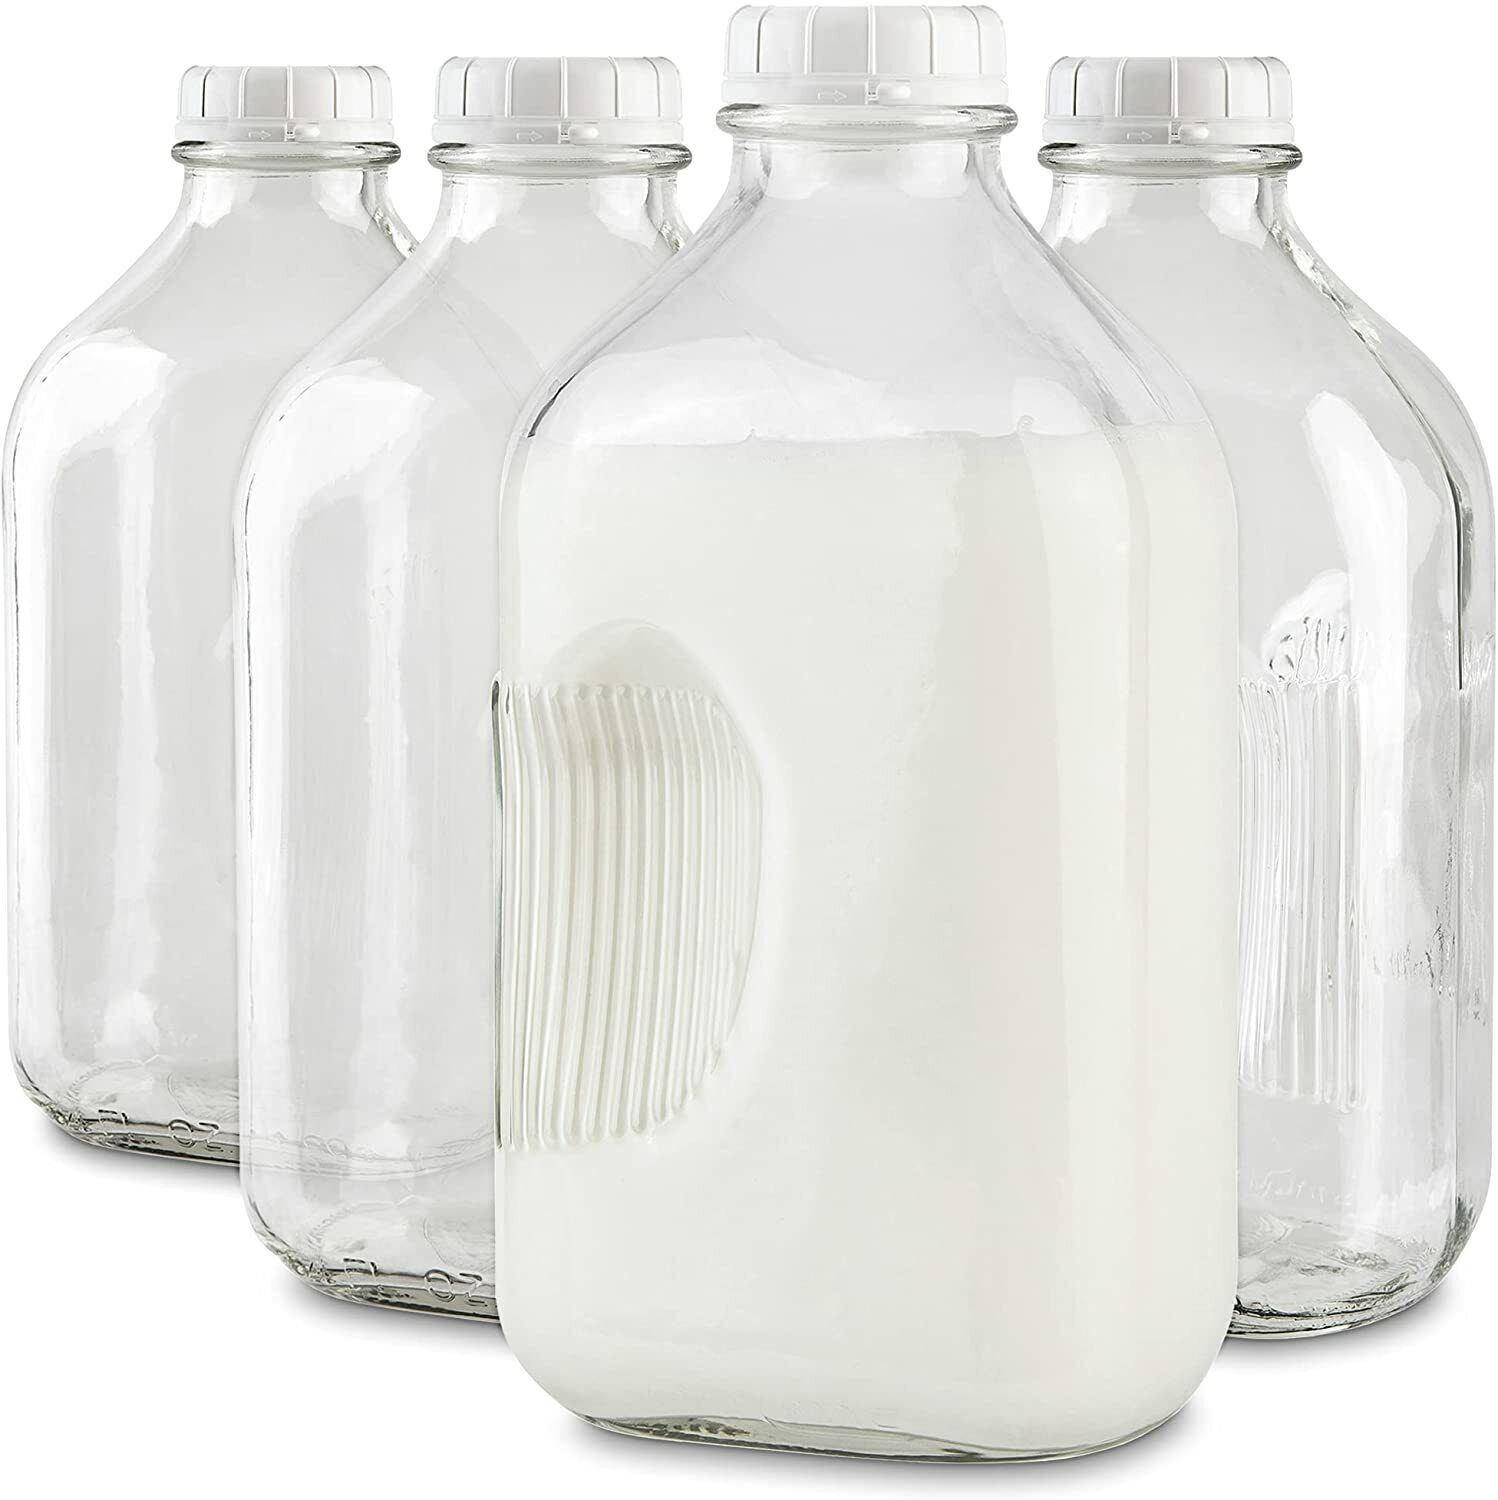 64- Oz Glass Milk Bottles with 8 White Caps (4 Count ) Food Grade Glass Bottles